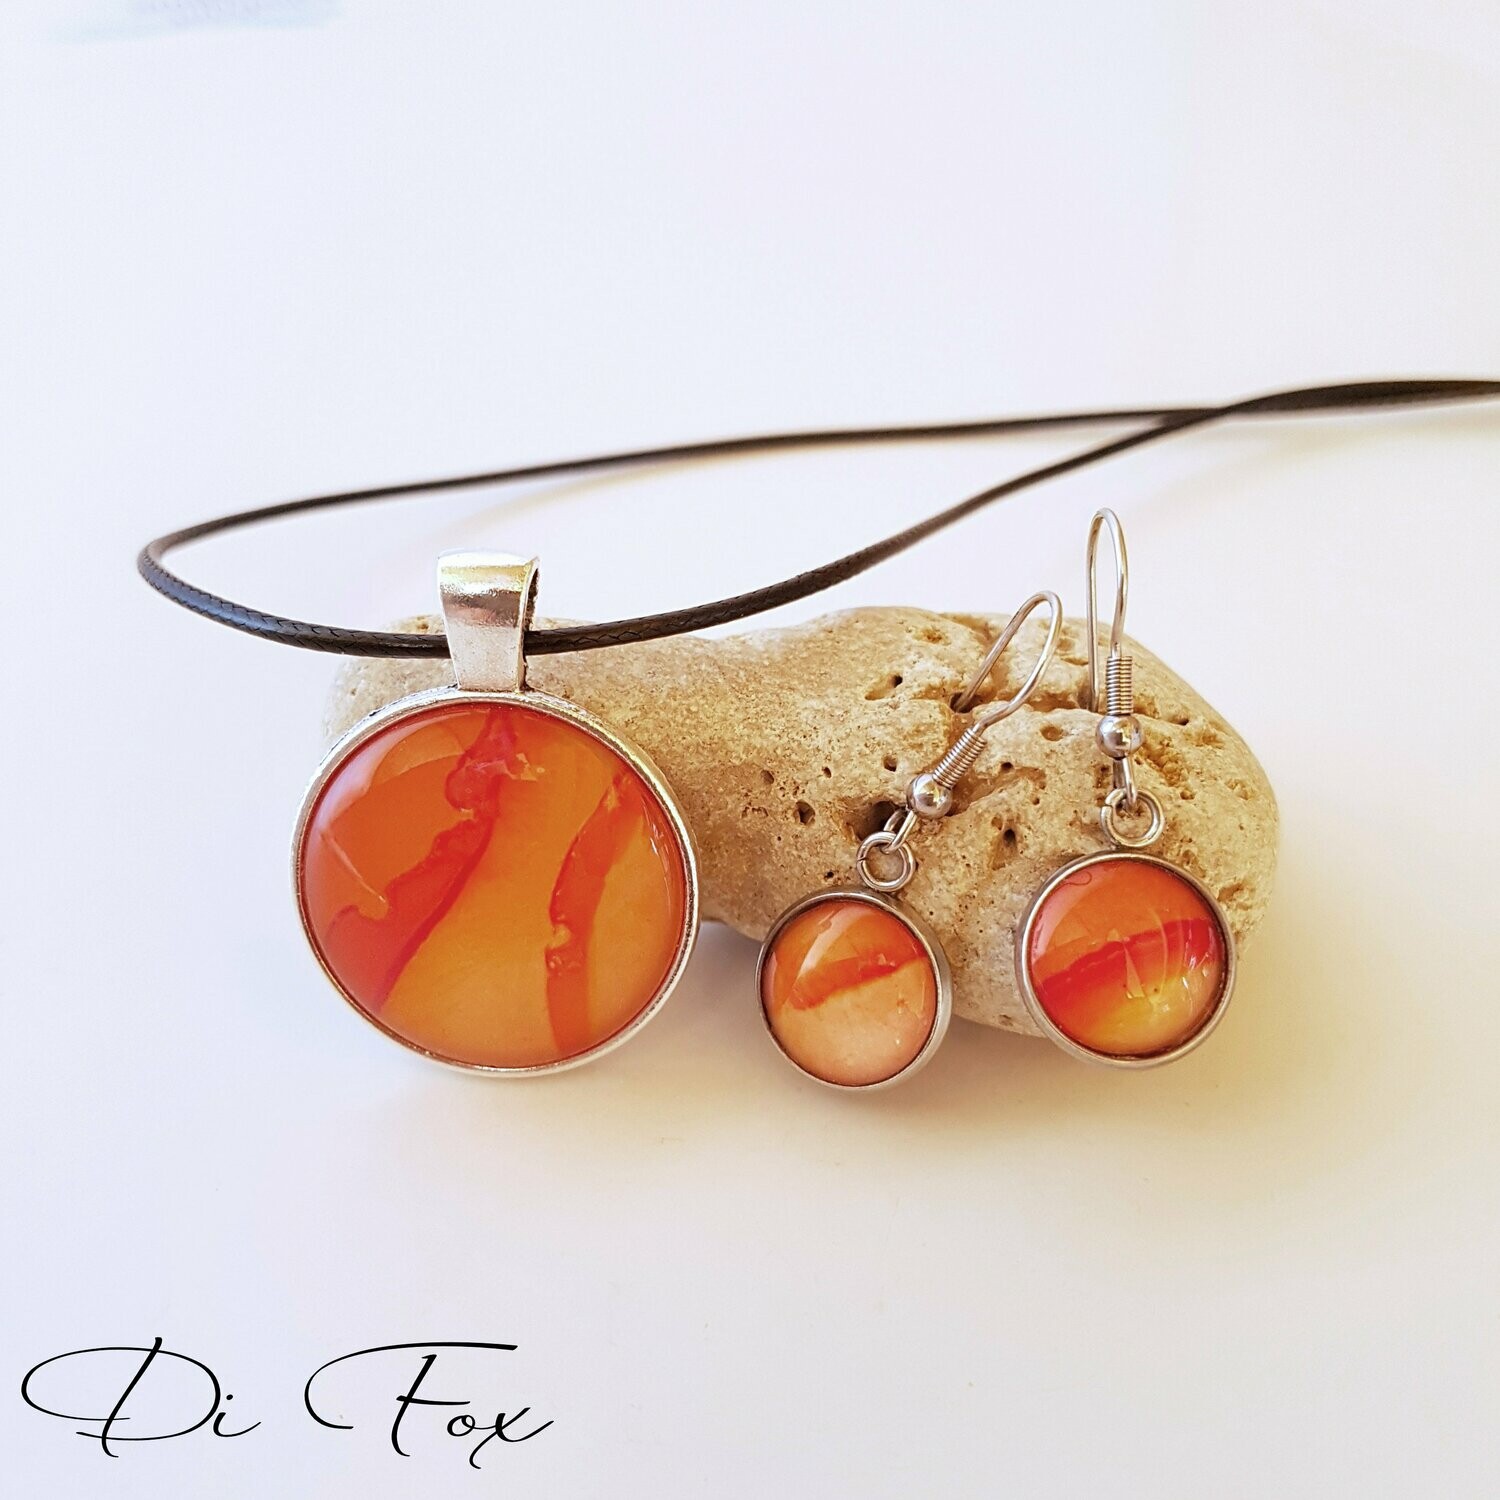 Tangerine Orange pendant necklace and earring set